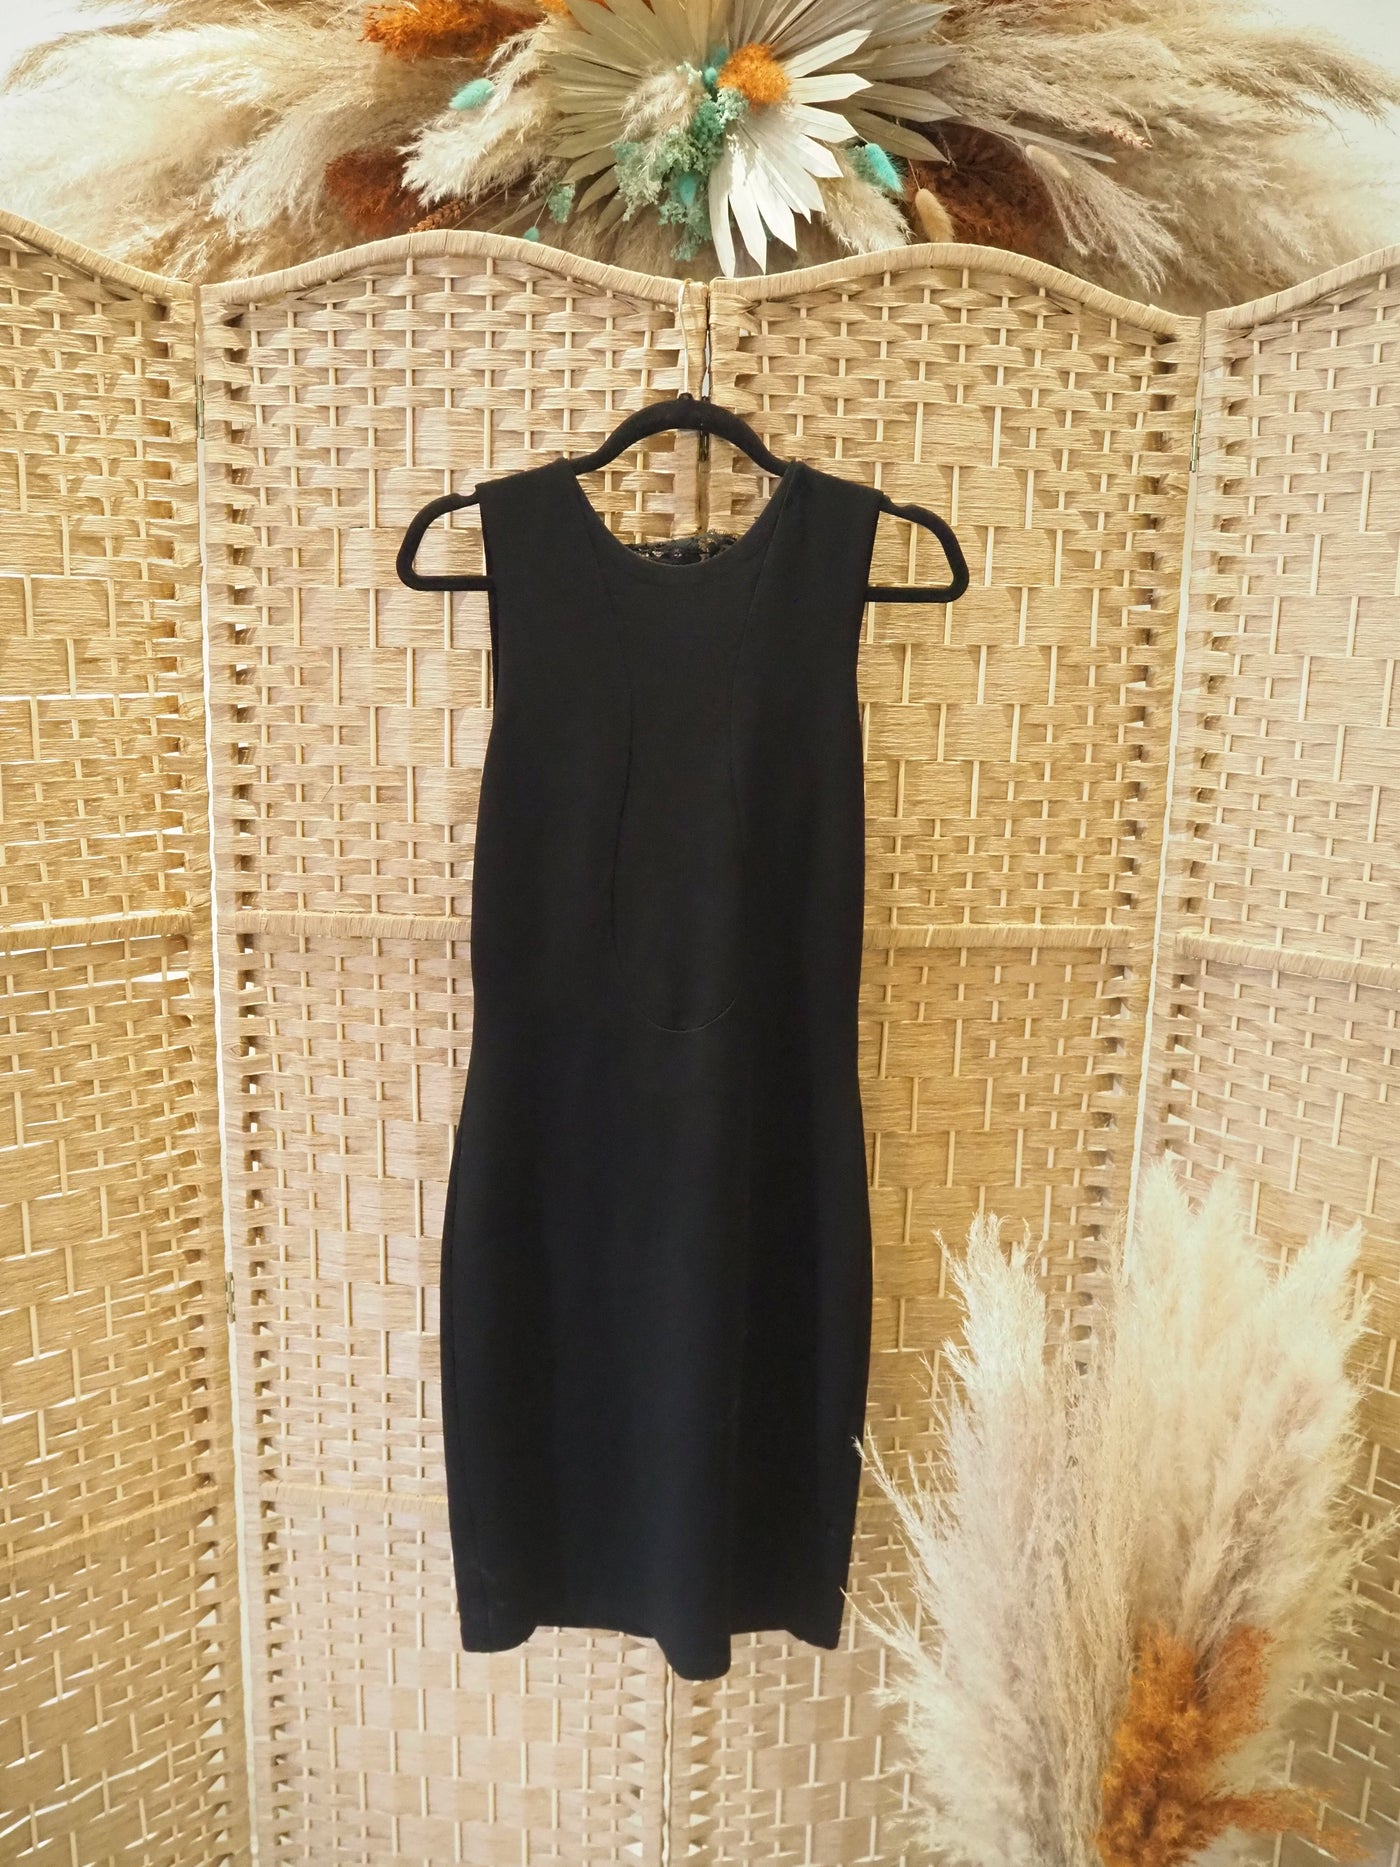 Alexander McQueen Black Lace Drape Back Dress Size Small